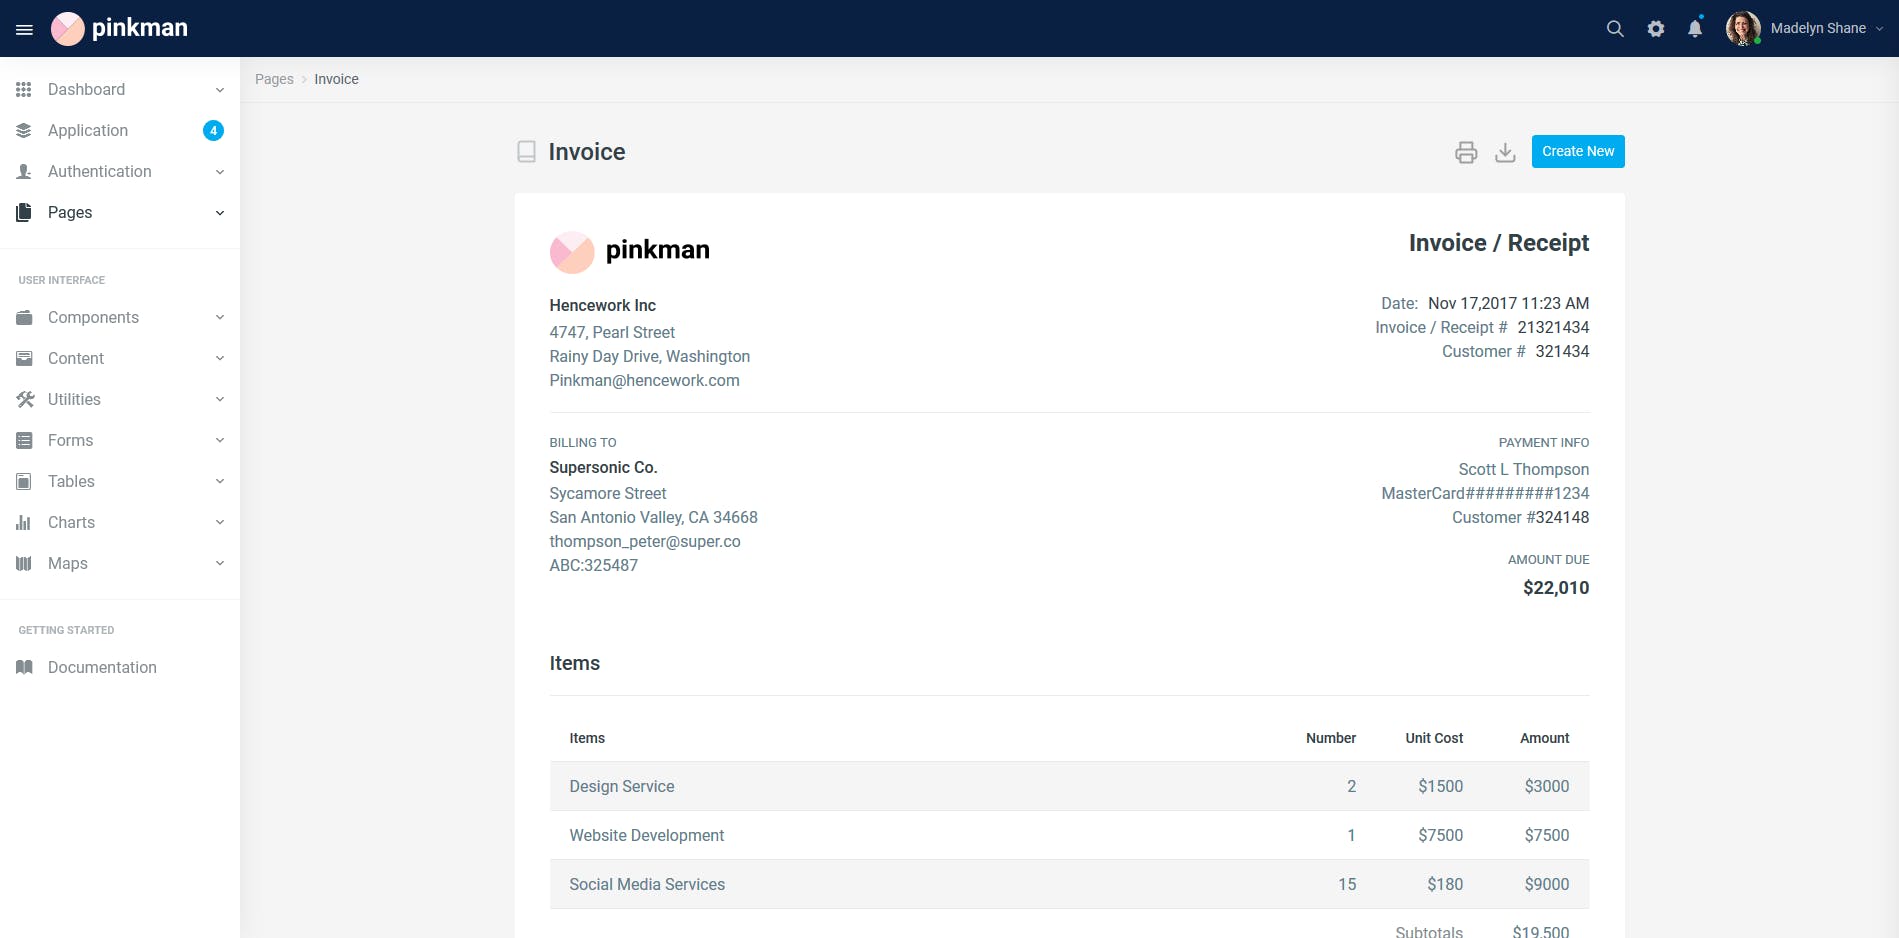 Bootstrap架构网站管理系统模板第一素材精选下载 Pinkman – Bootstrap 4 Admin Dashboard Template插图(14)